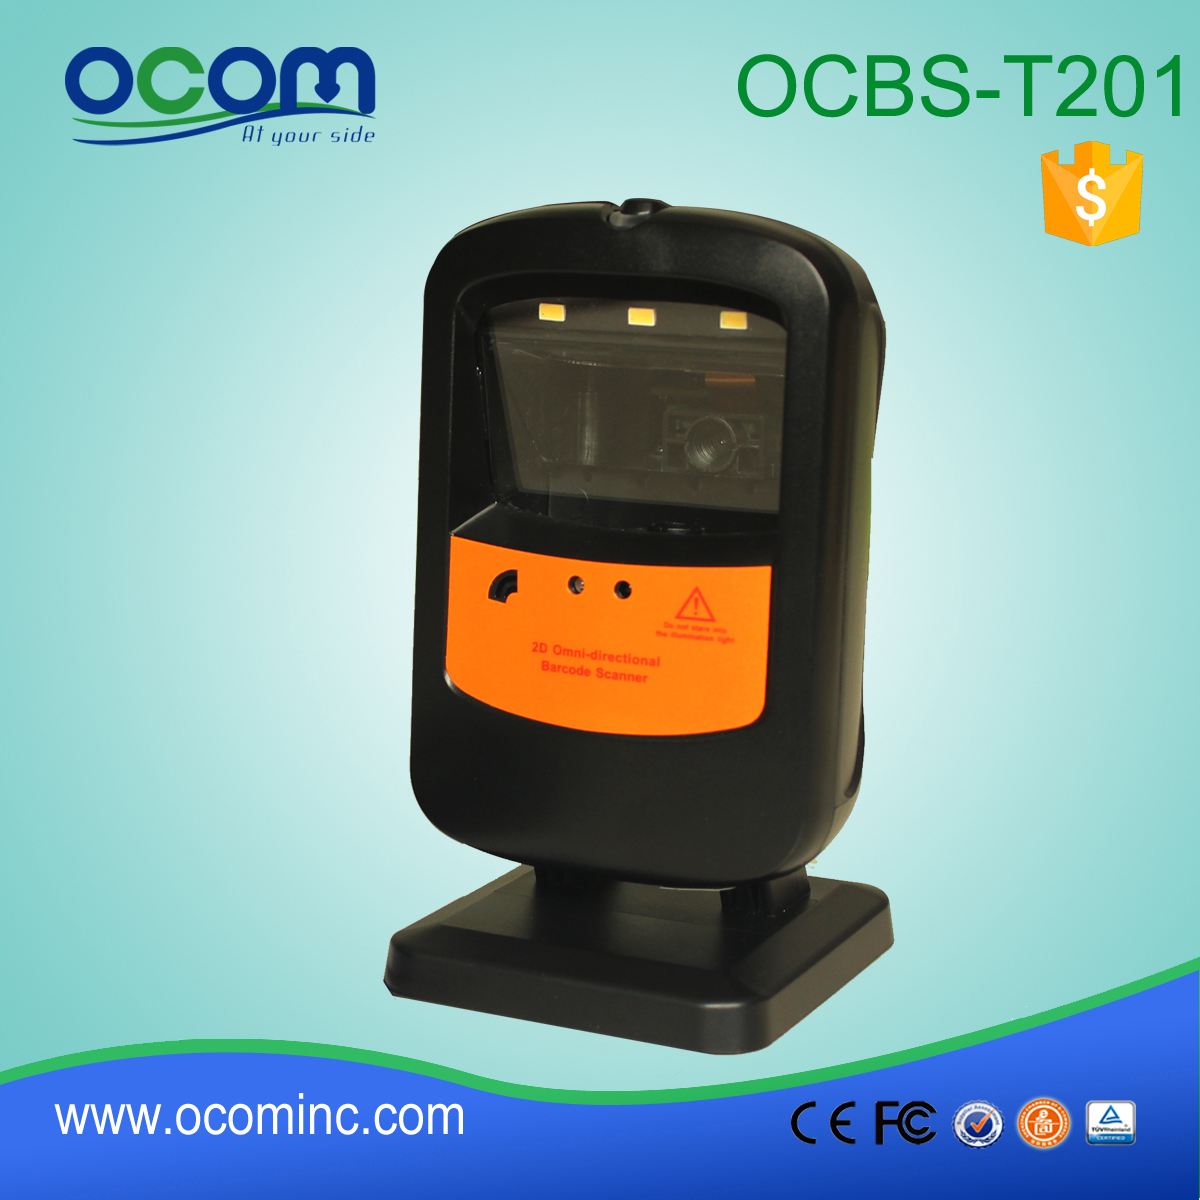 Omni-direzionale 2D a mano libera barcode scanner OCBS-T201